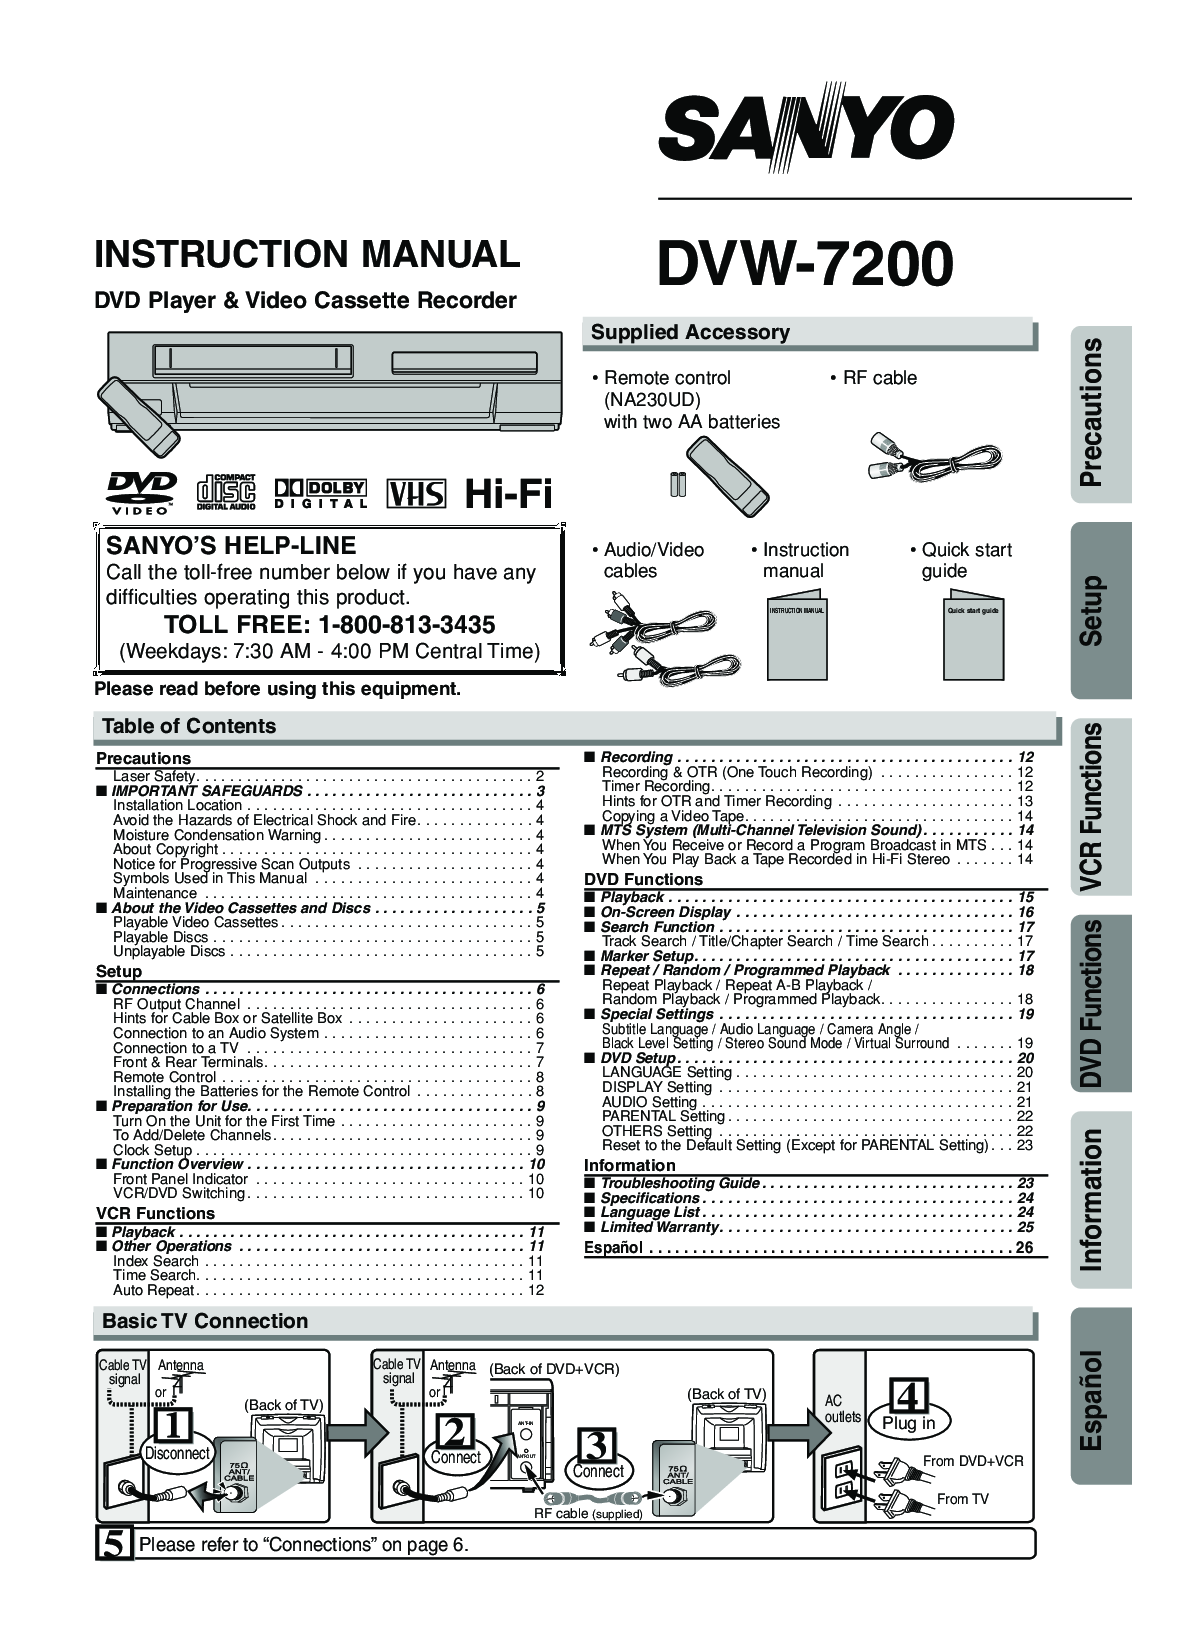 Sanyo DVW-7200 User Manual